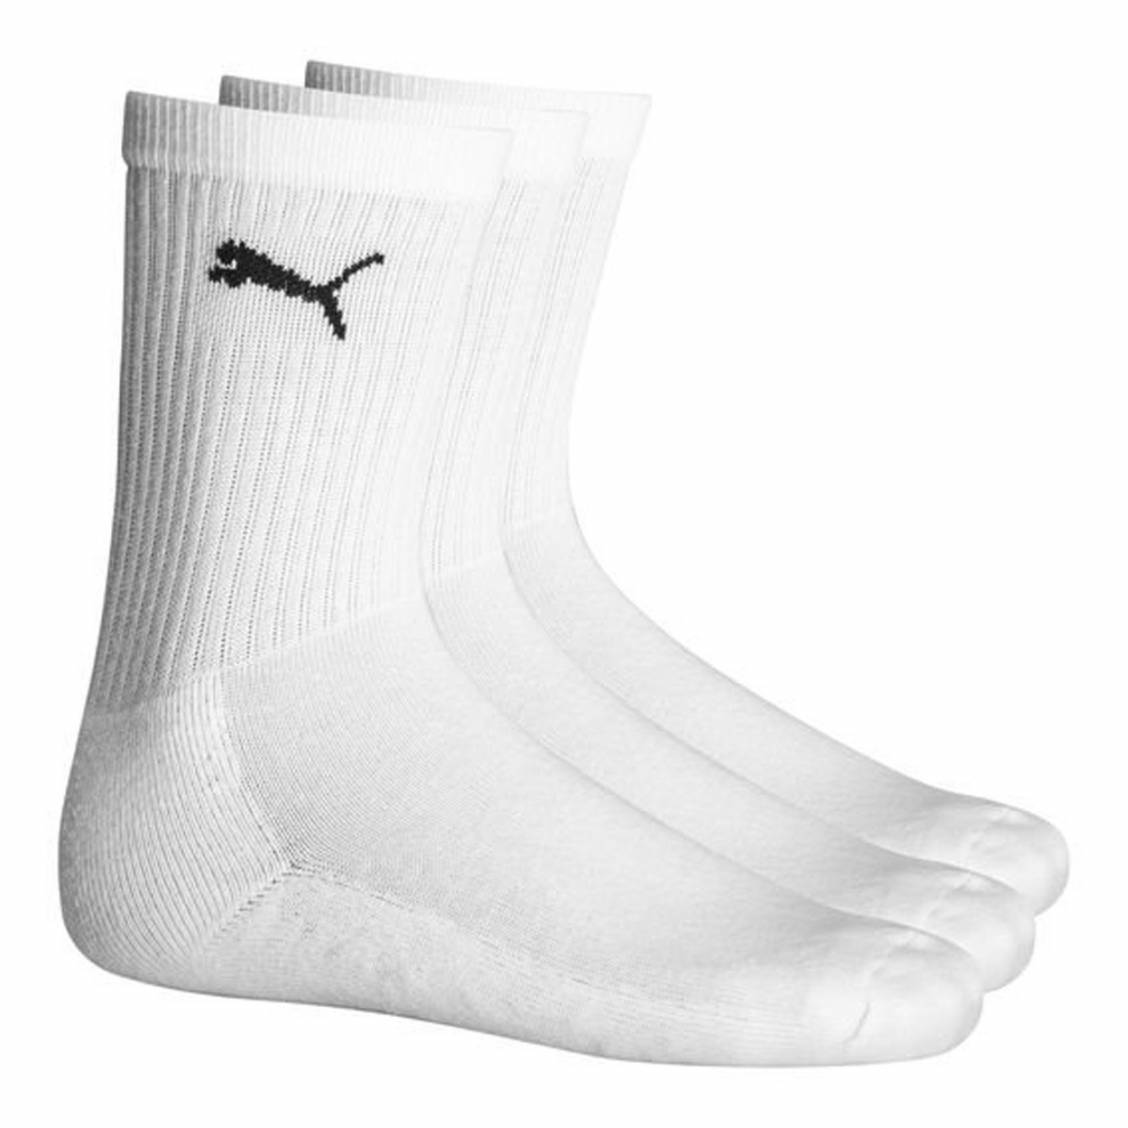 Mi-chaussettes Classic Socks Puma® - lot de 2 paires, marine